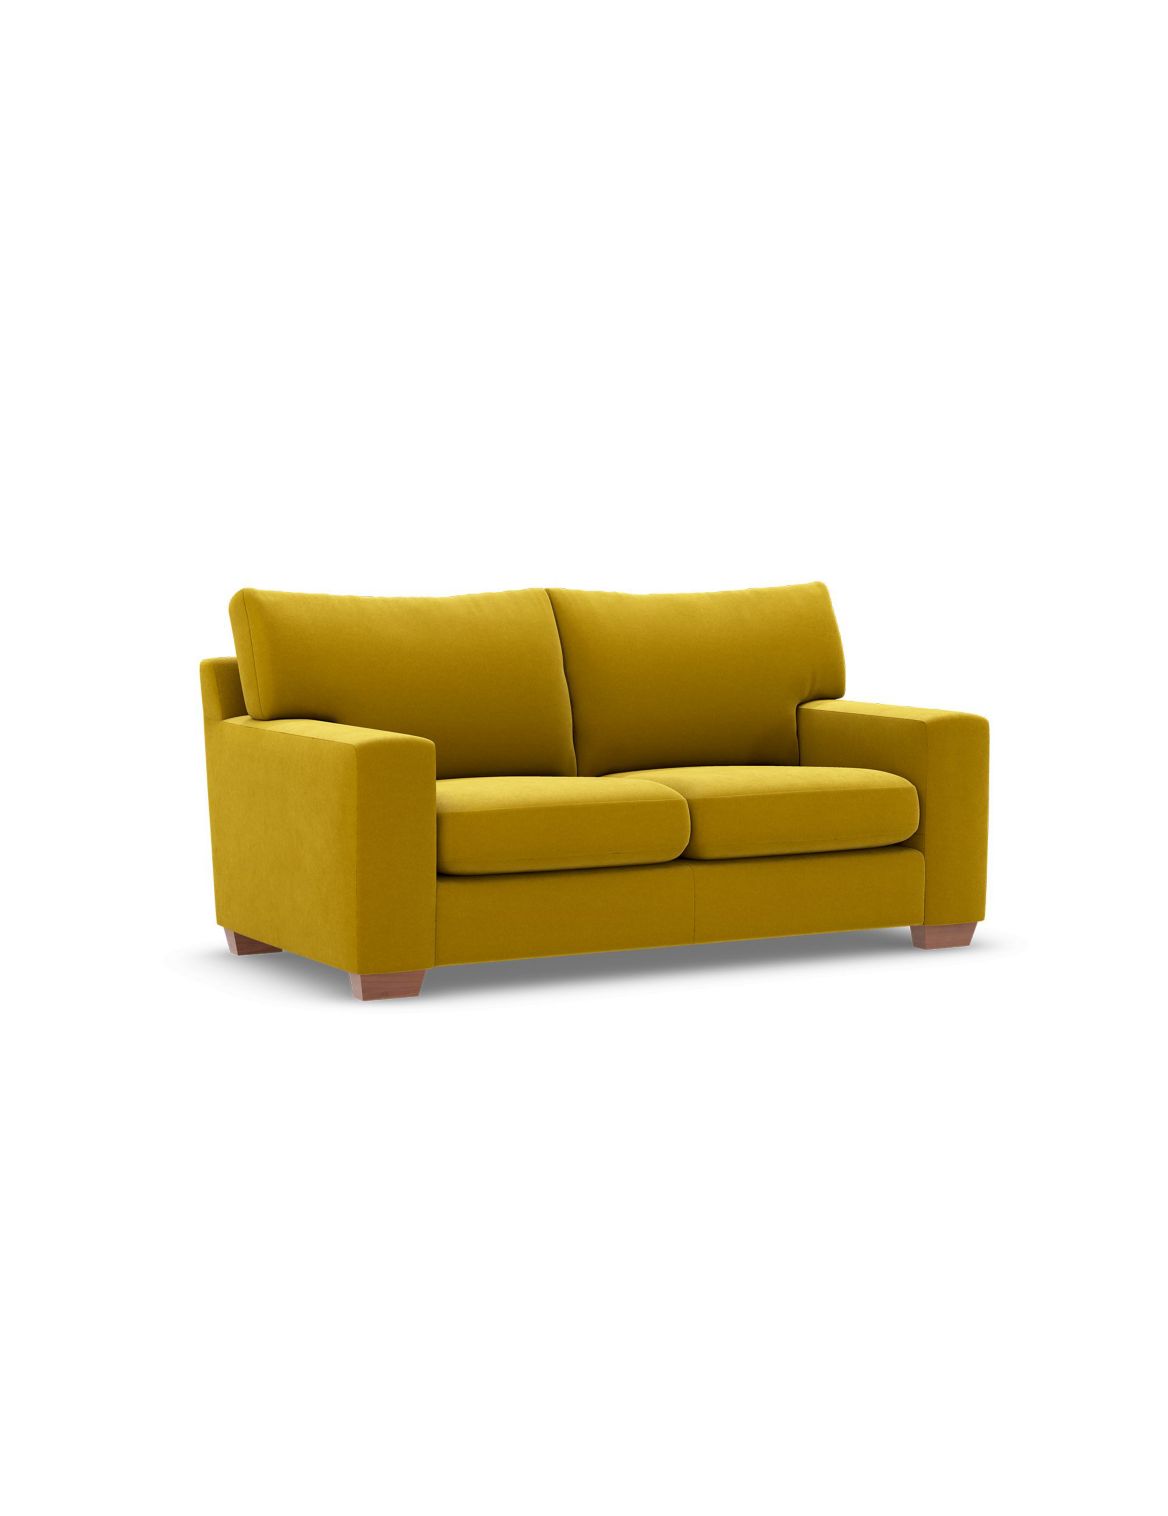 Alfie Small Sofa yellow